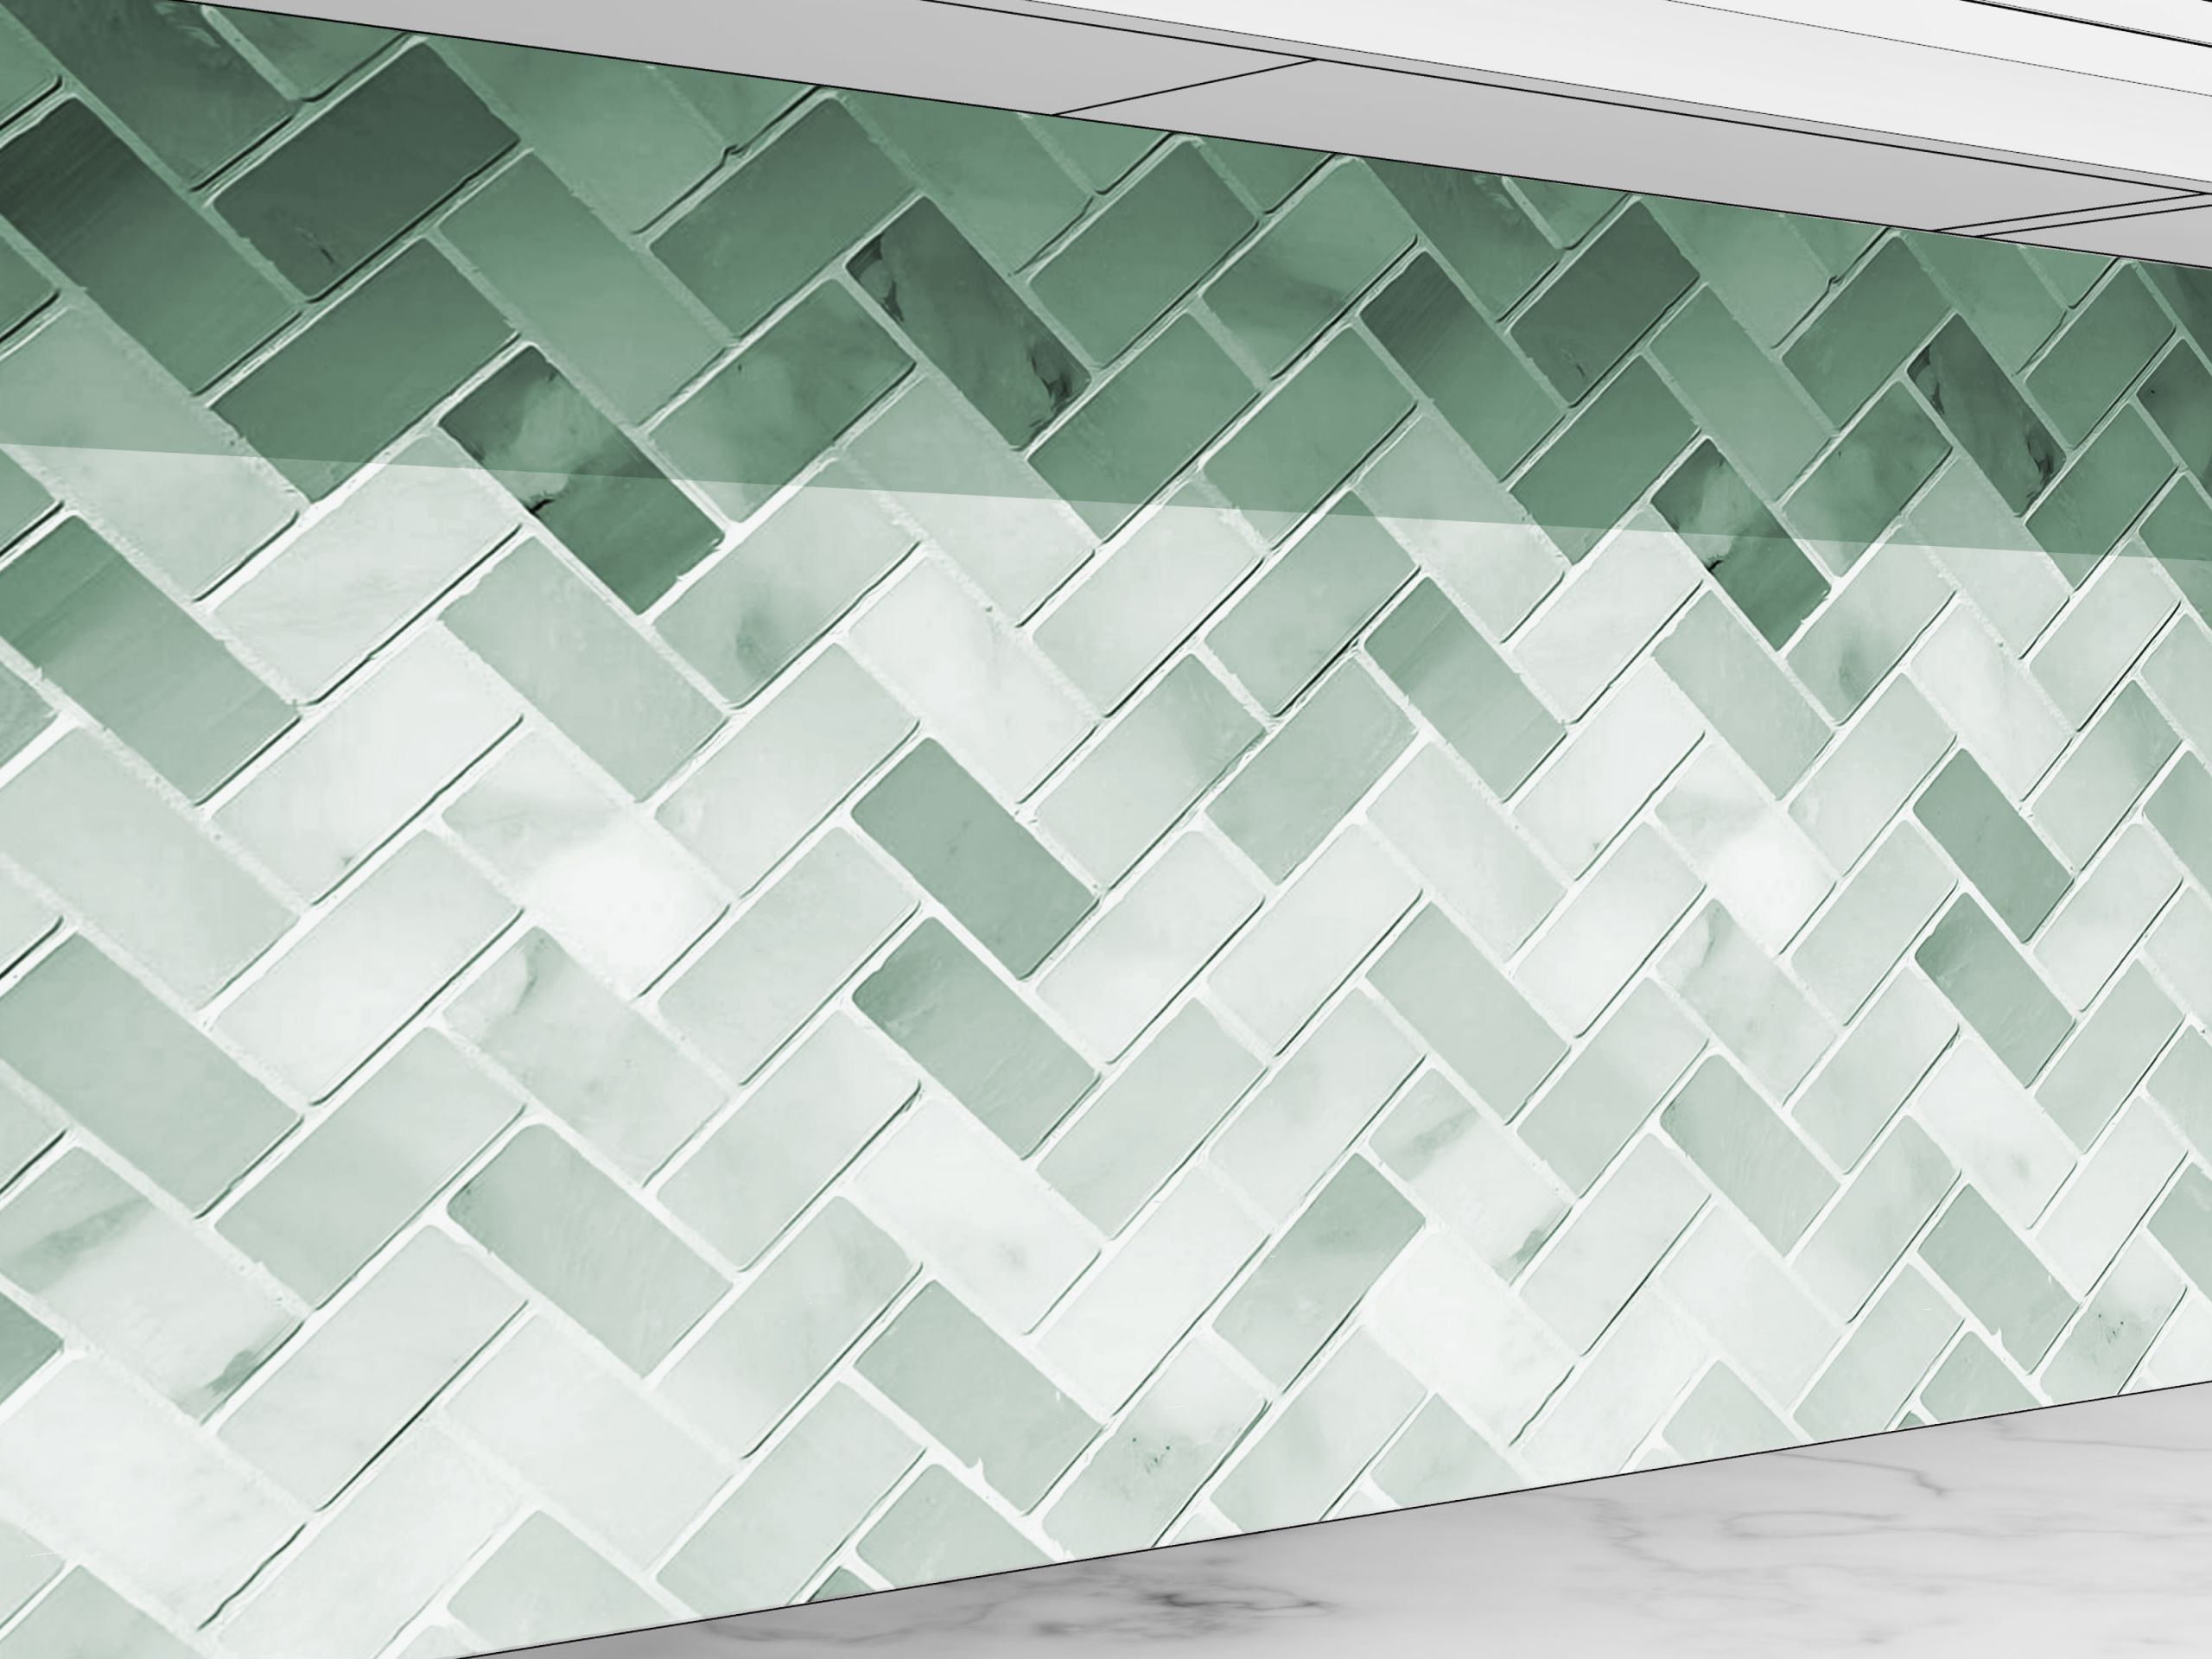 Backsplash Herringbone Subway Tile Elegant Easy Ways to Select A Kitchen Backsplash 12 Steps Wikihow